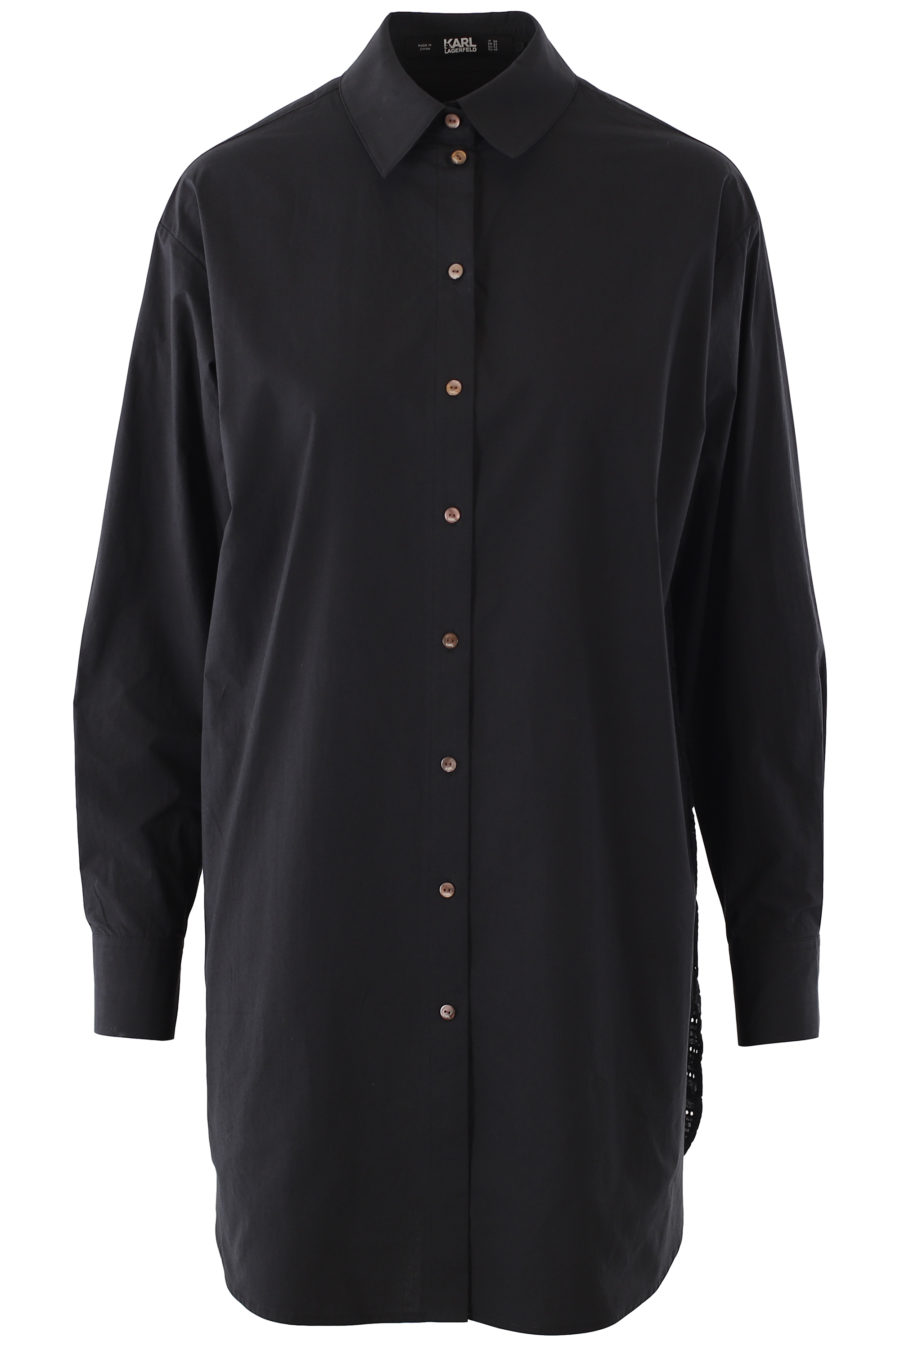 Camisa negra larga con logo y detalles bordados - IMG 1251